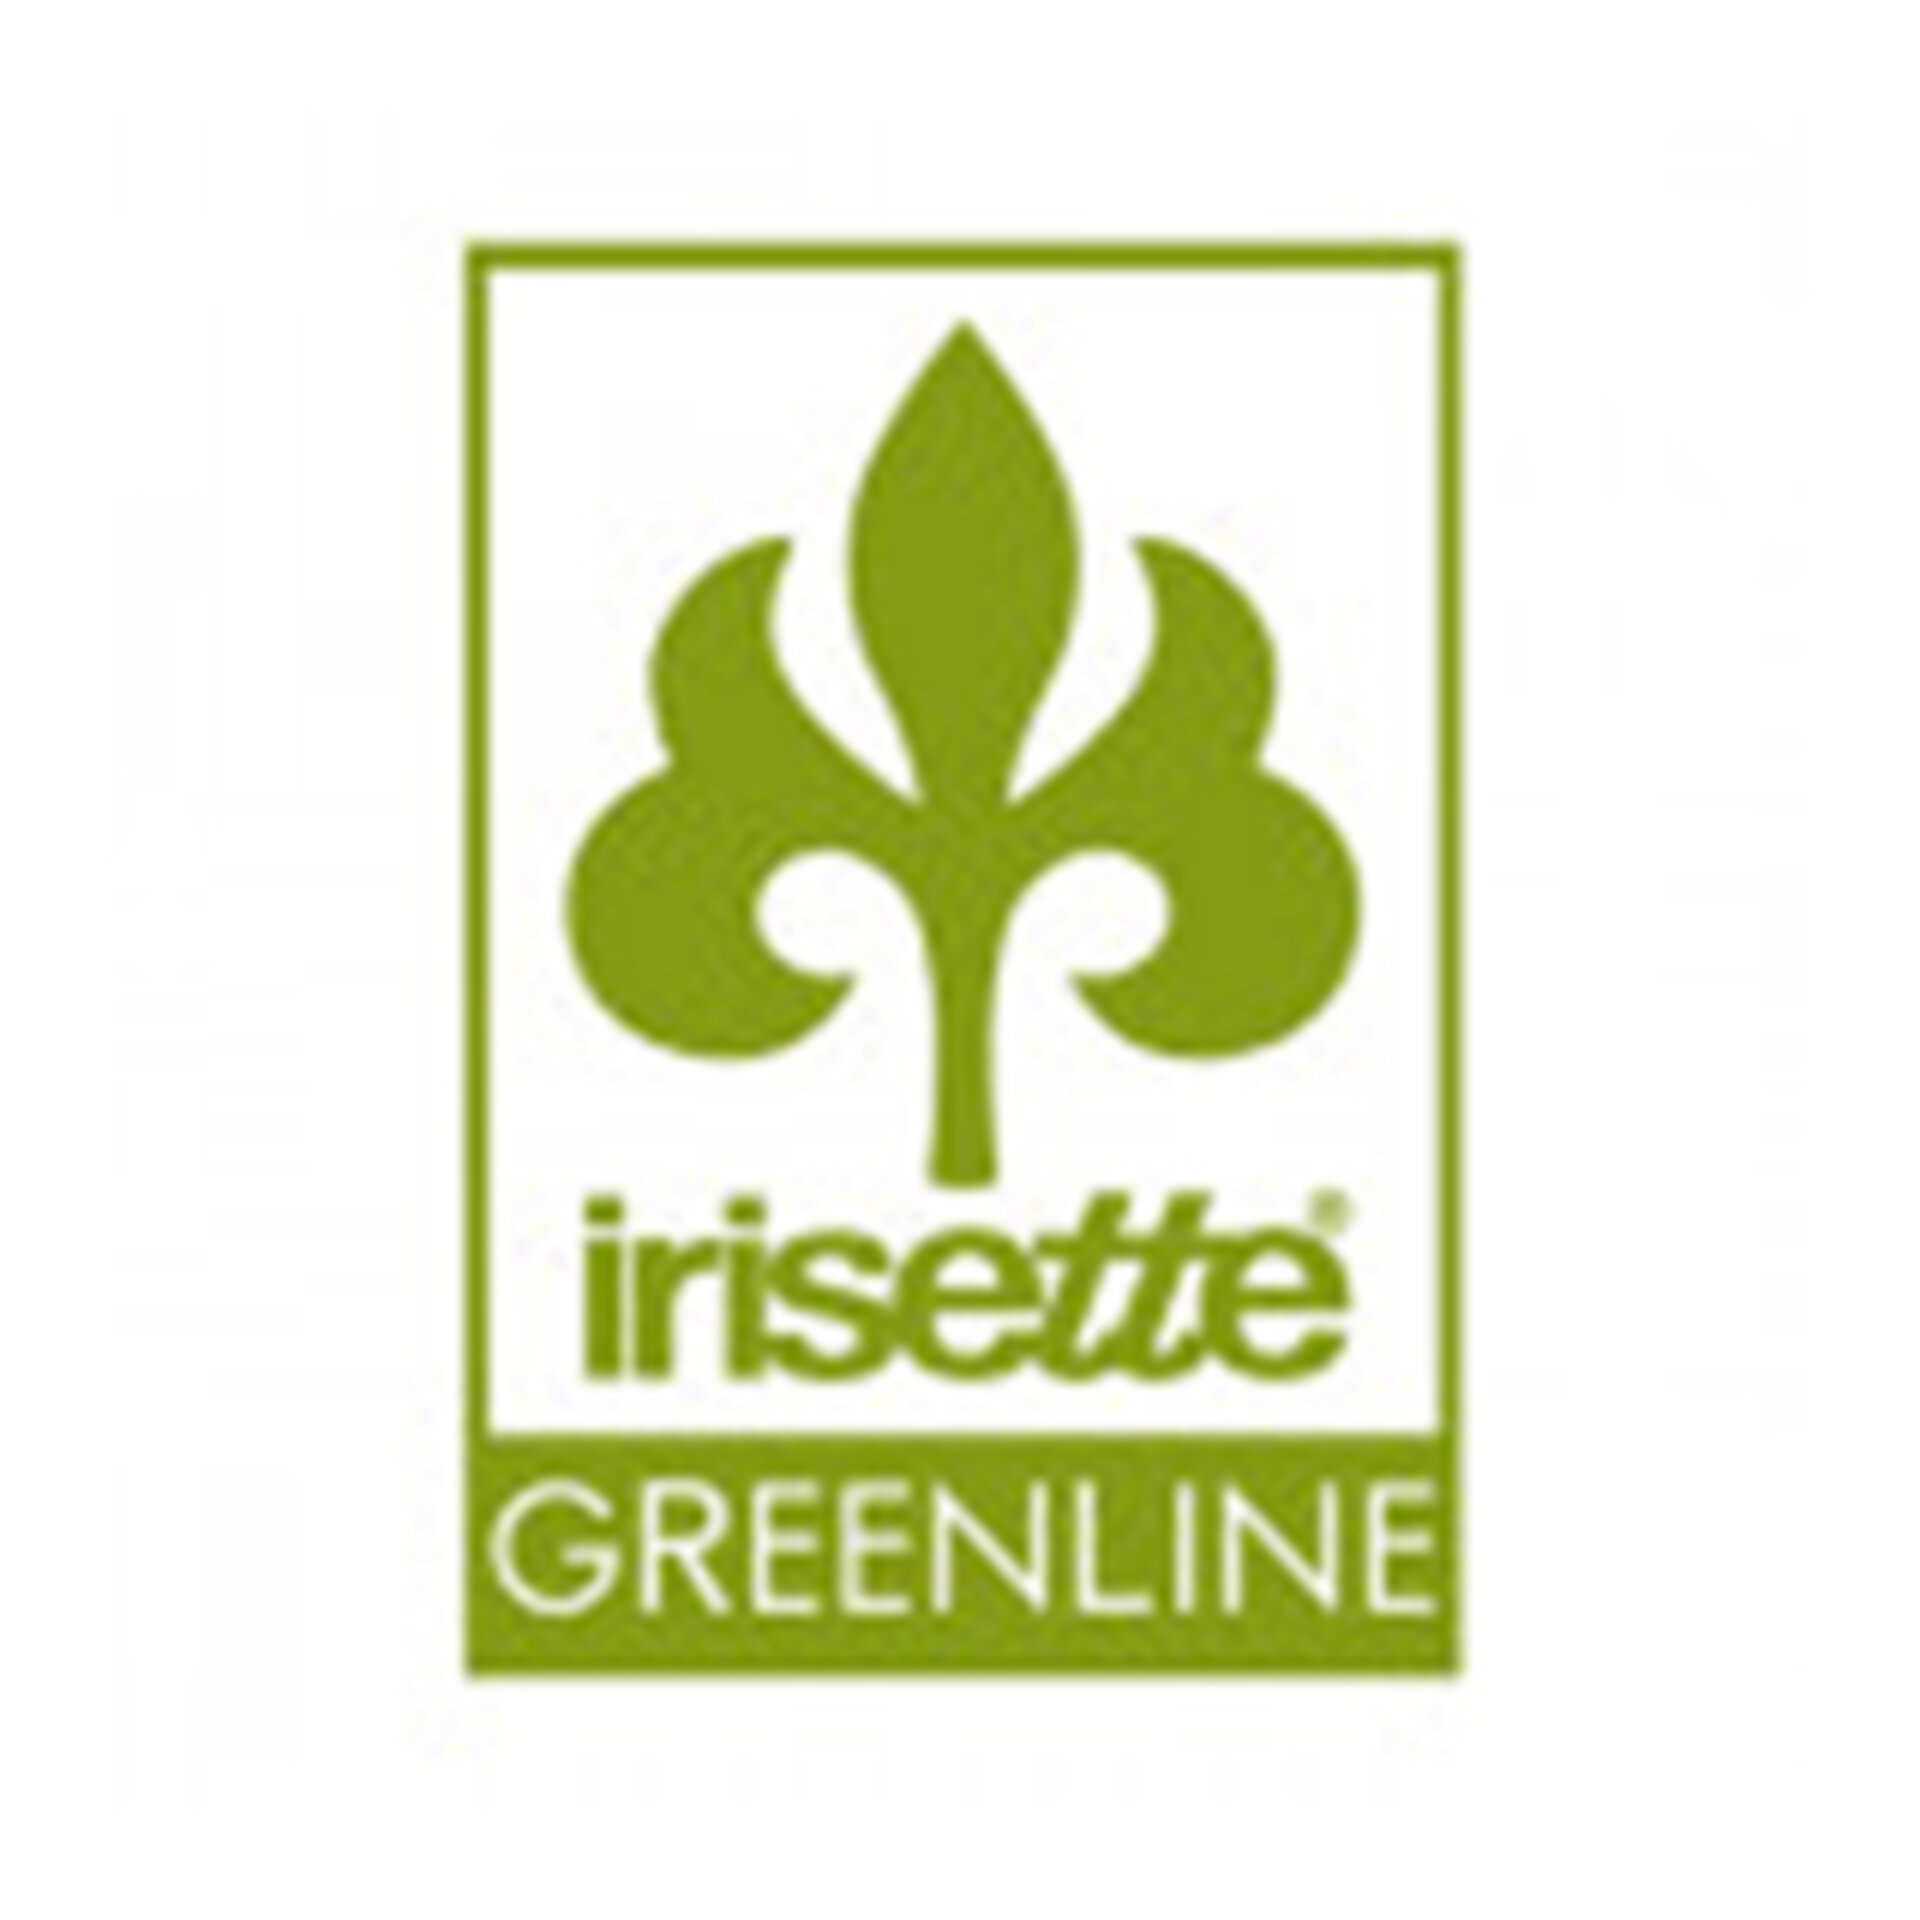 Badenia Irisette Greenline